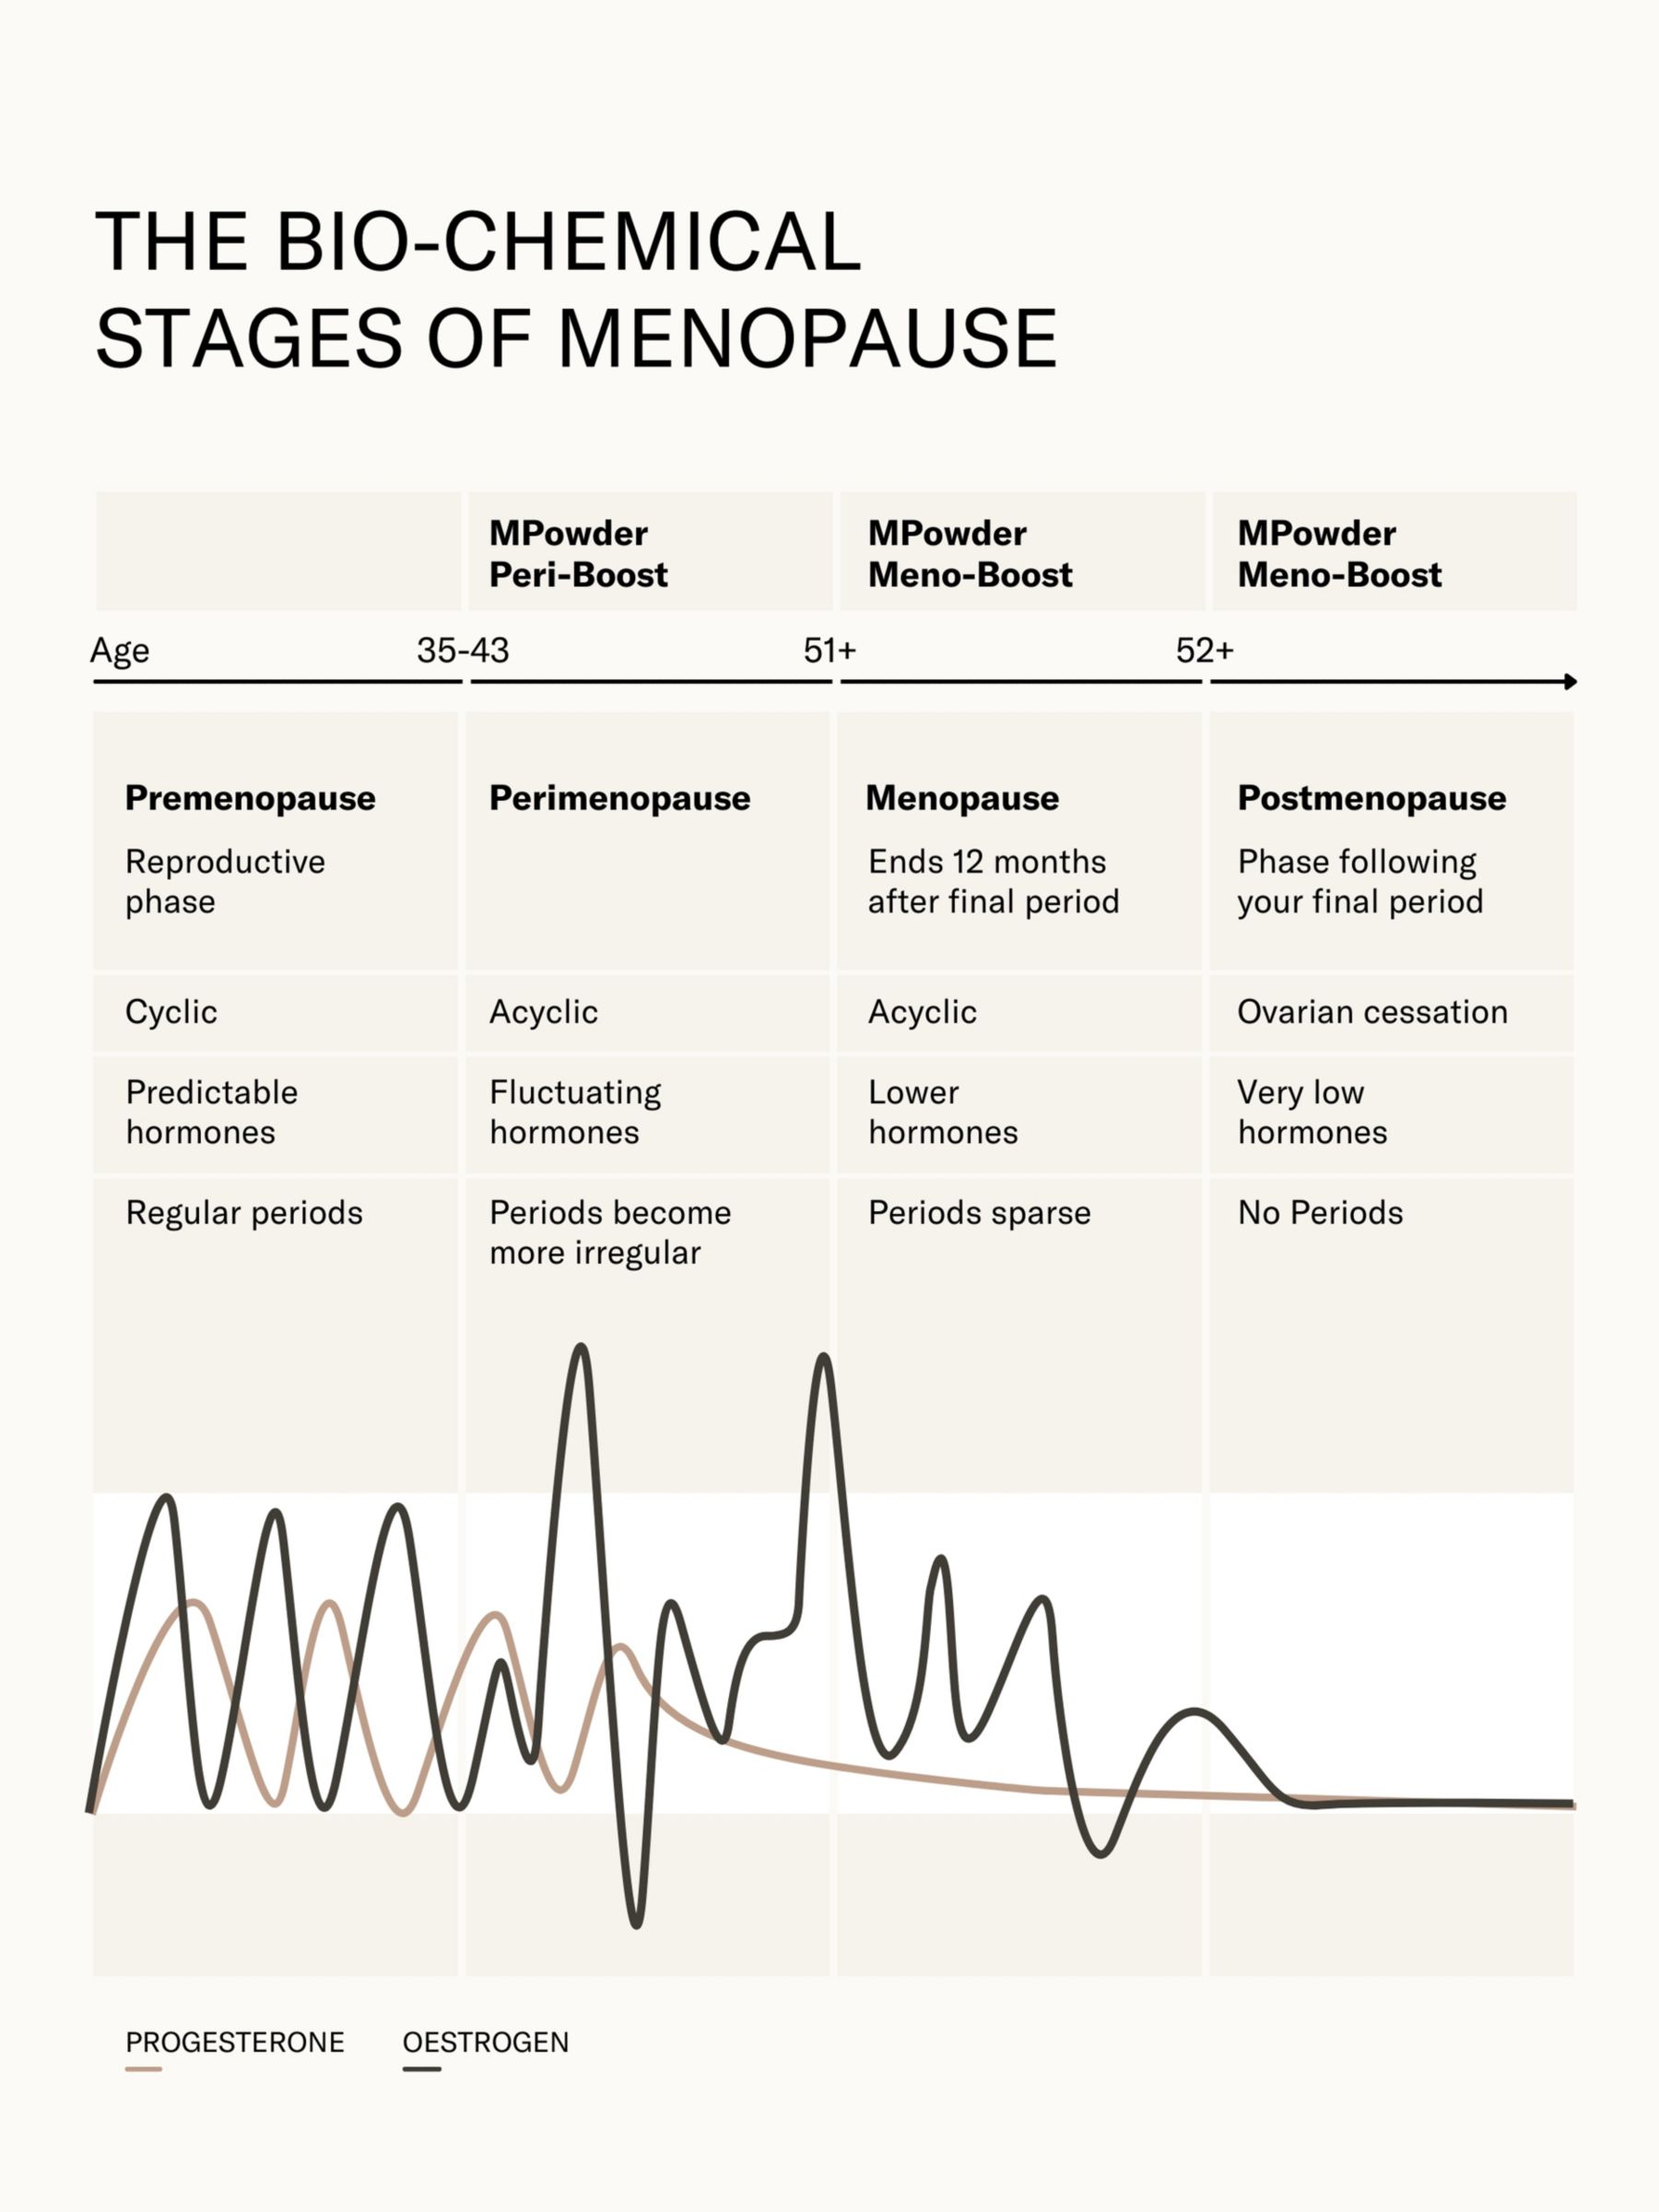 MPowder MENO-BOOST Menopause Supplement, 30 servings 8